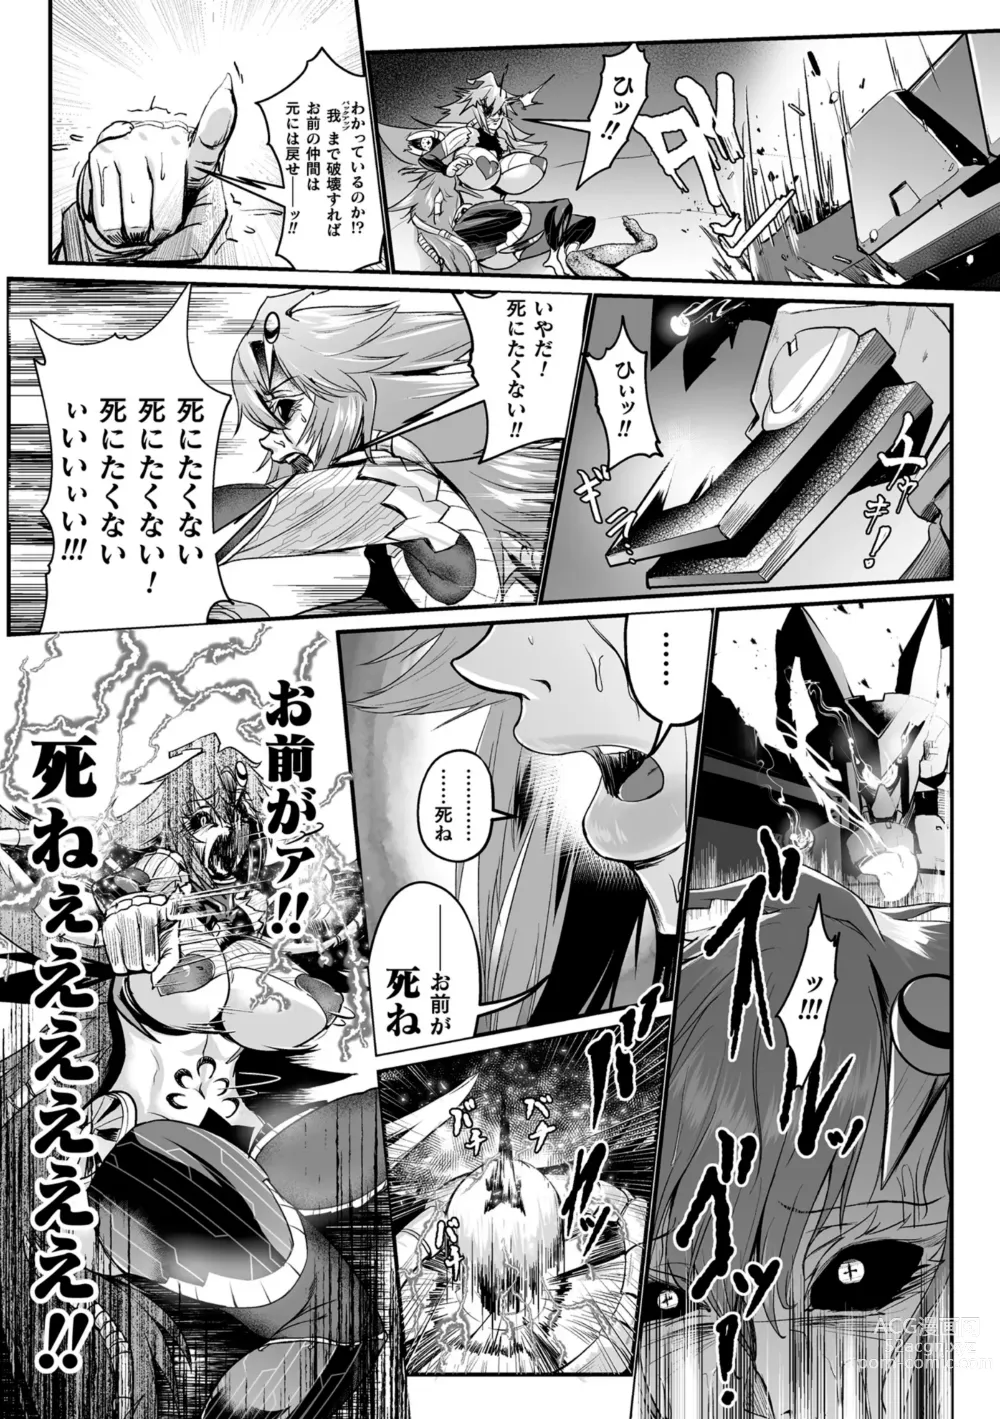 Page 33 of manga Carbonite Cocytus - Episode III